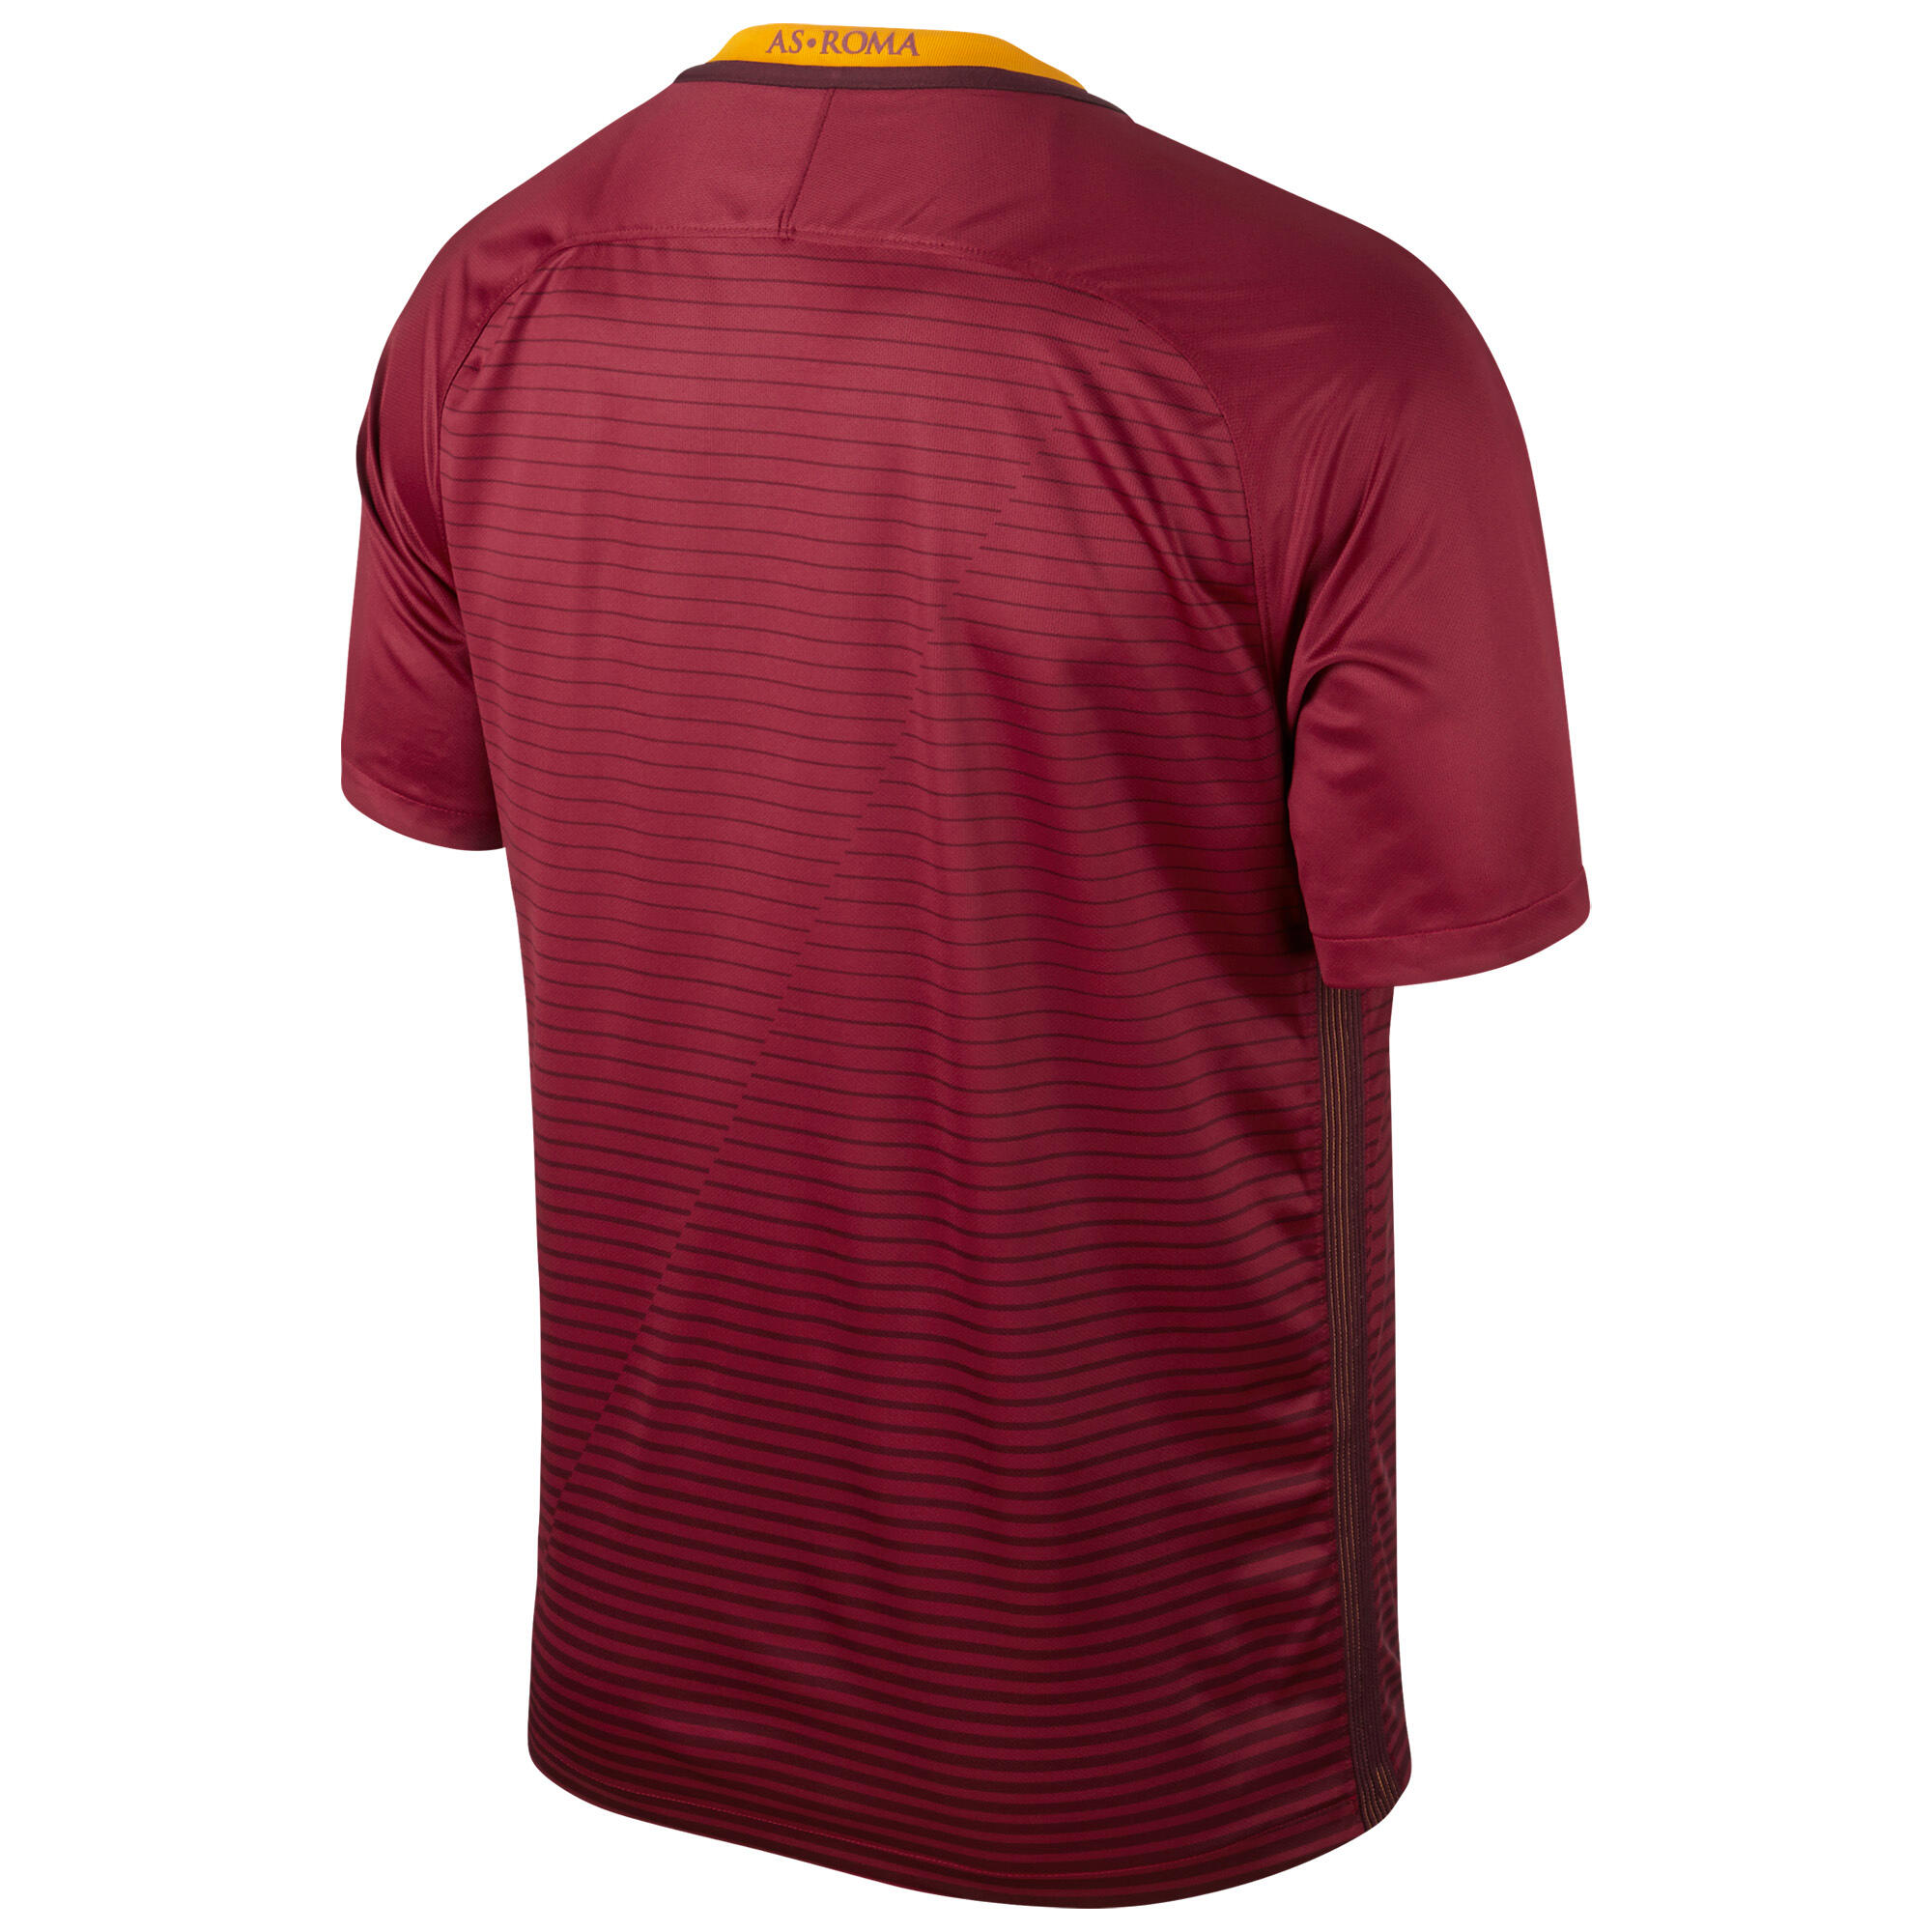 AS Roma Kids Football Replica Shirt - Red 2/4